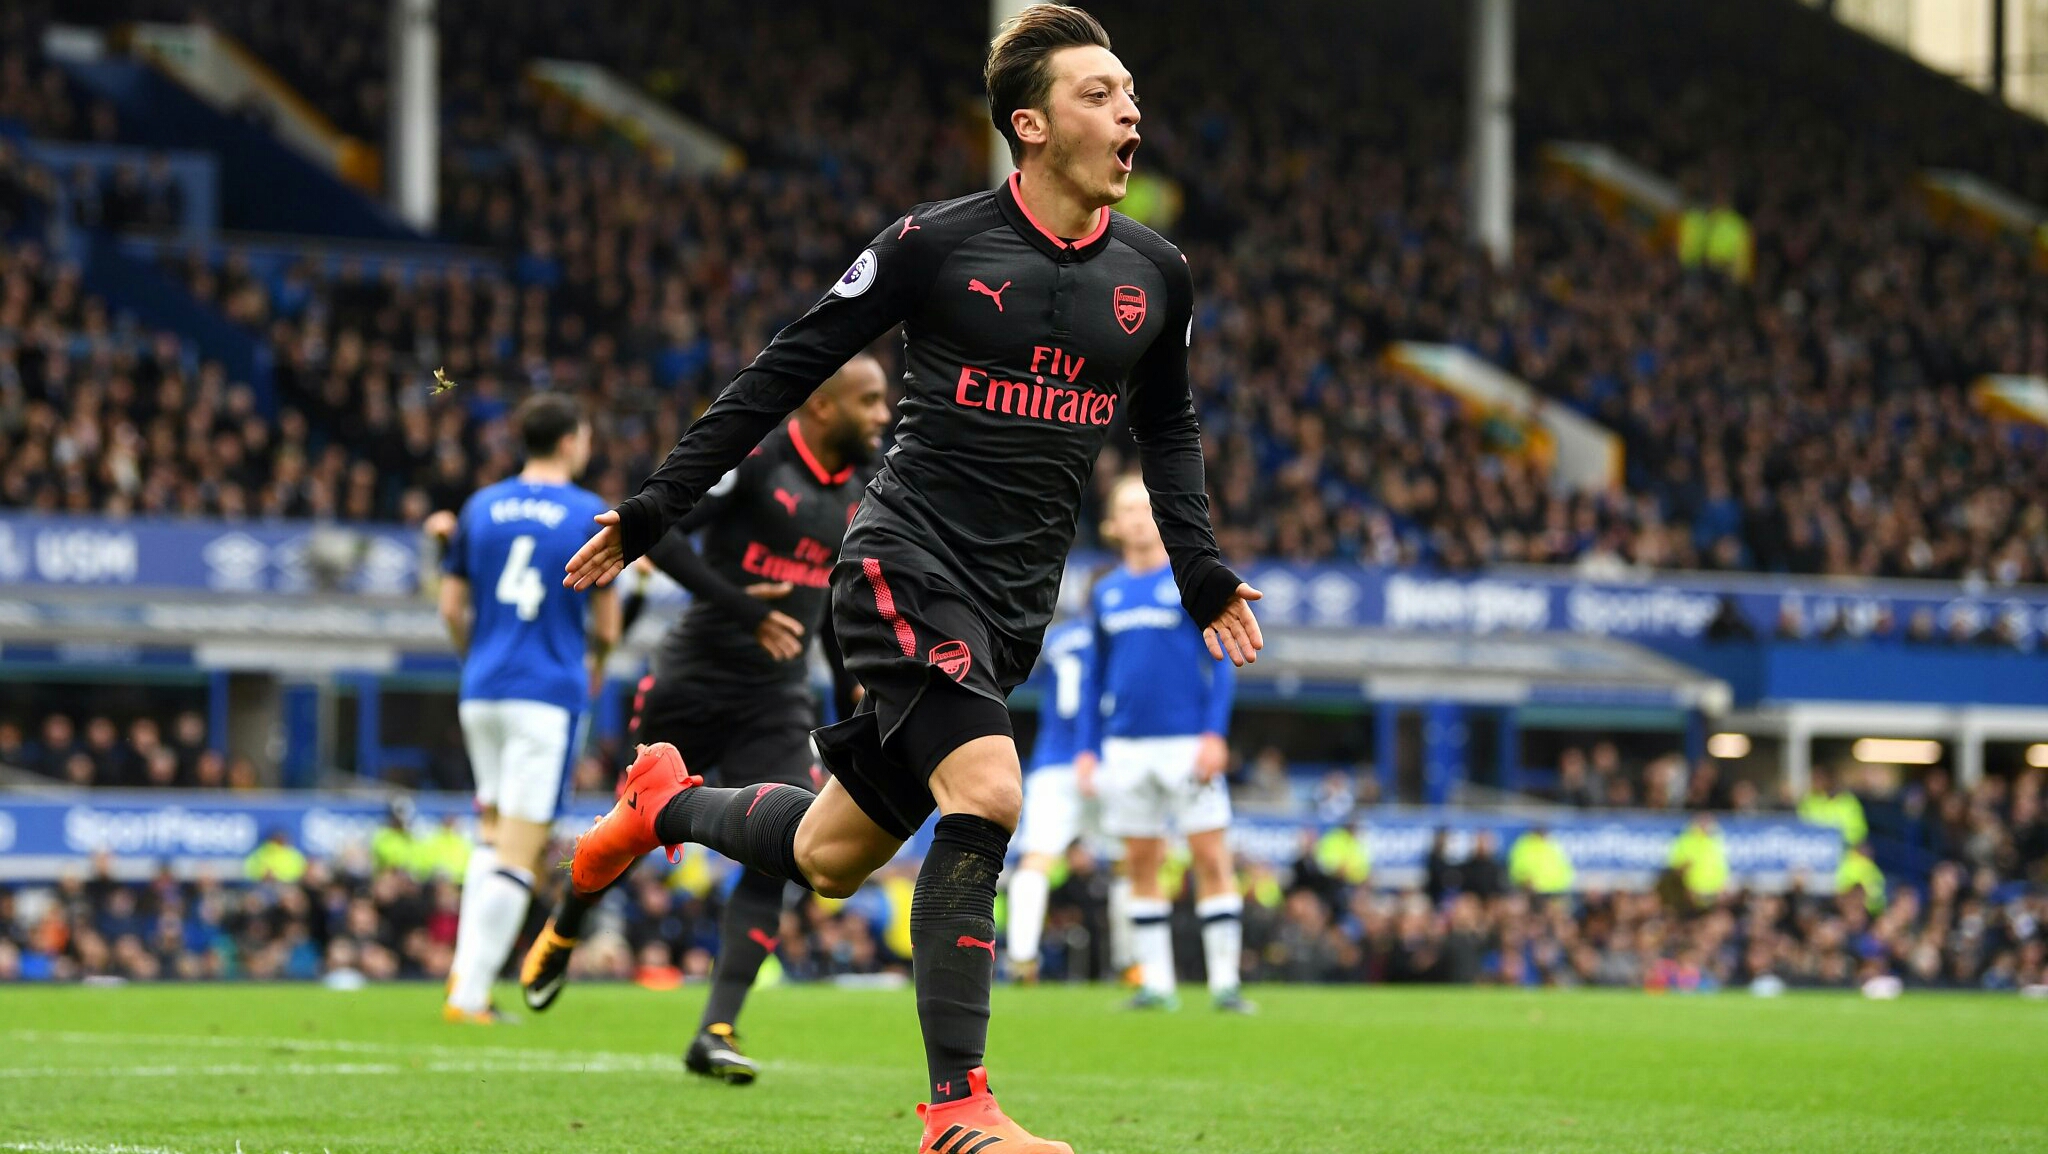 Mesut Ozil celebrates his goal in Arsenal's win against Everton